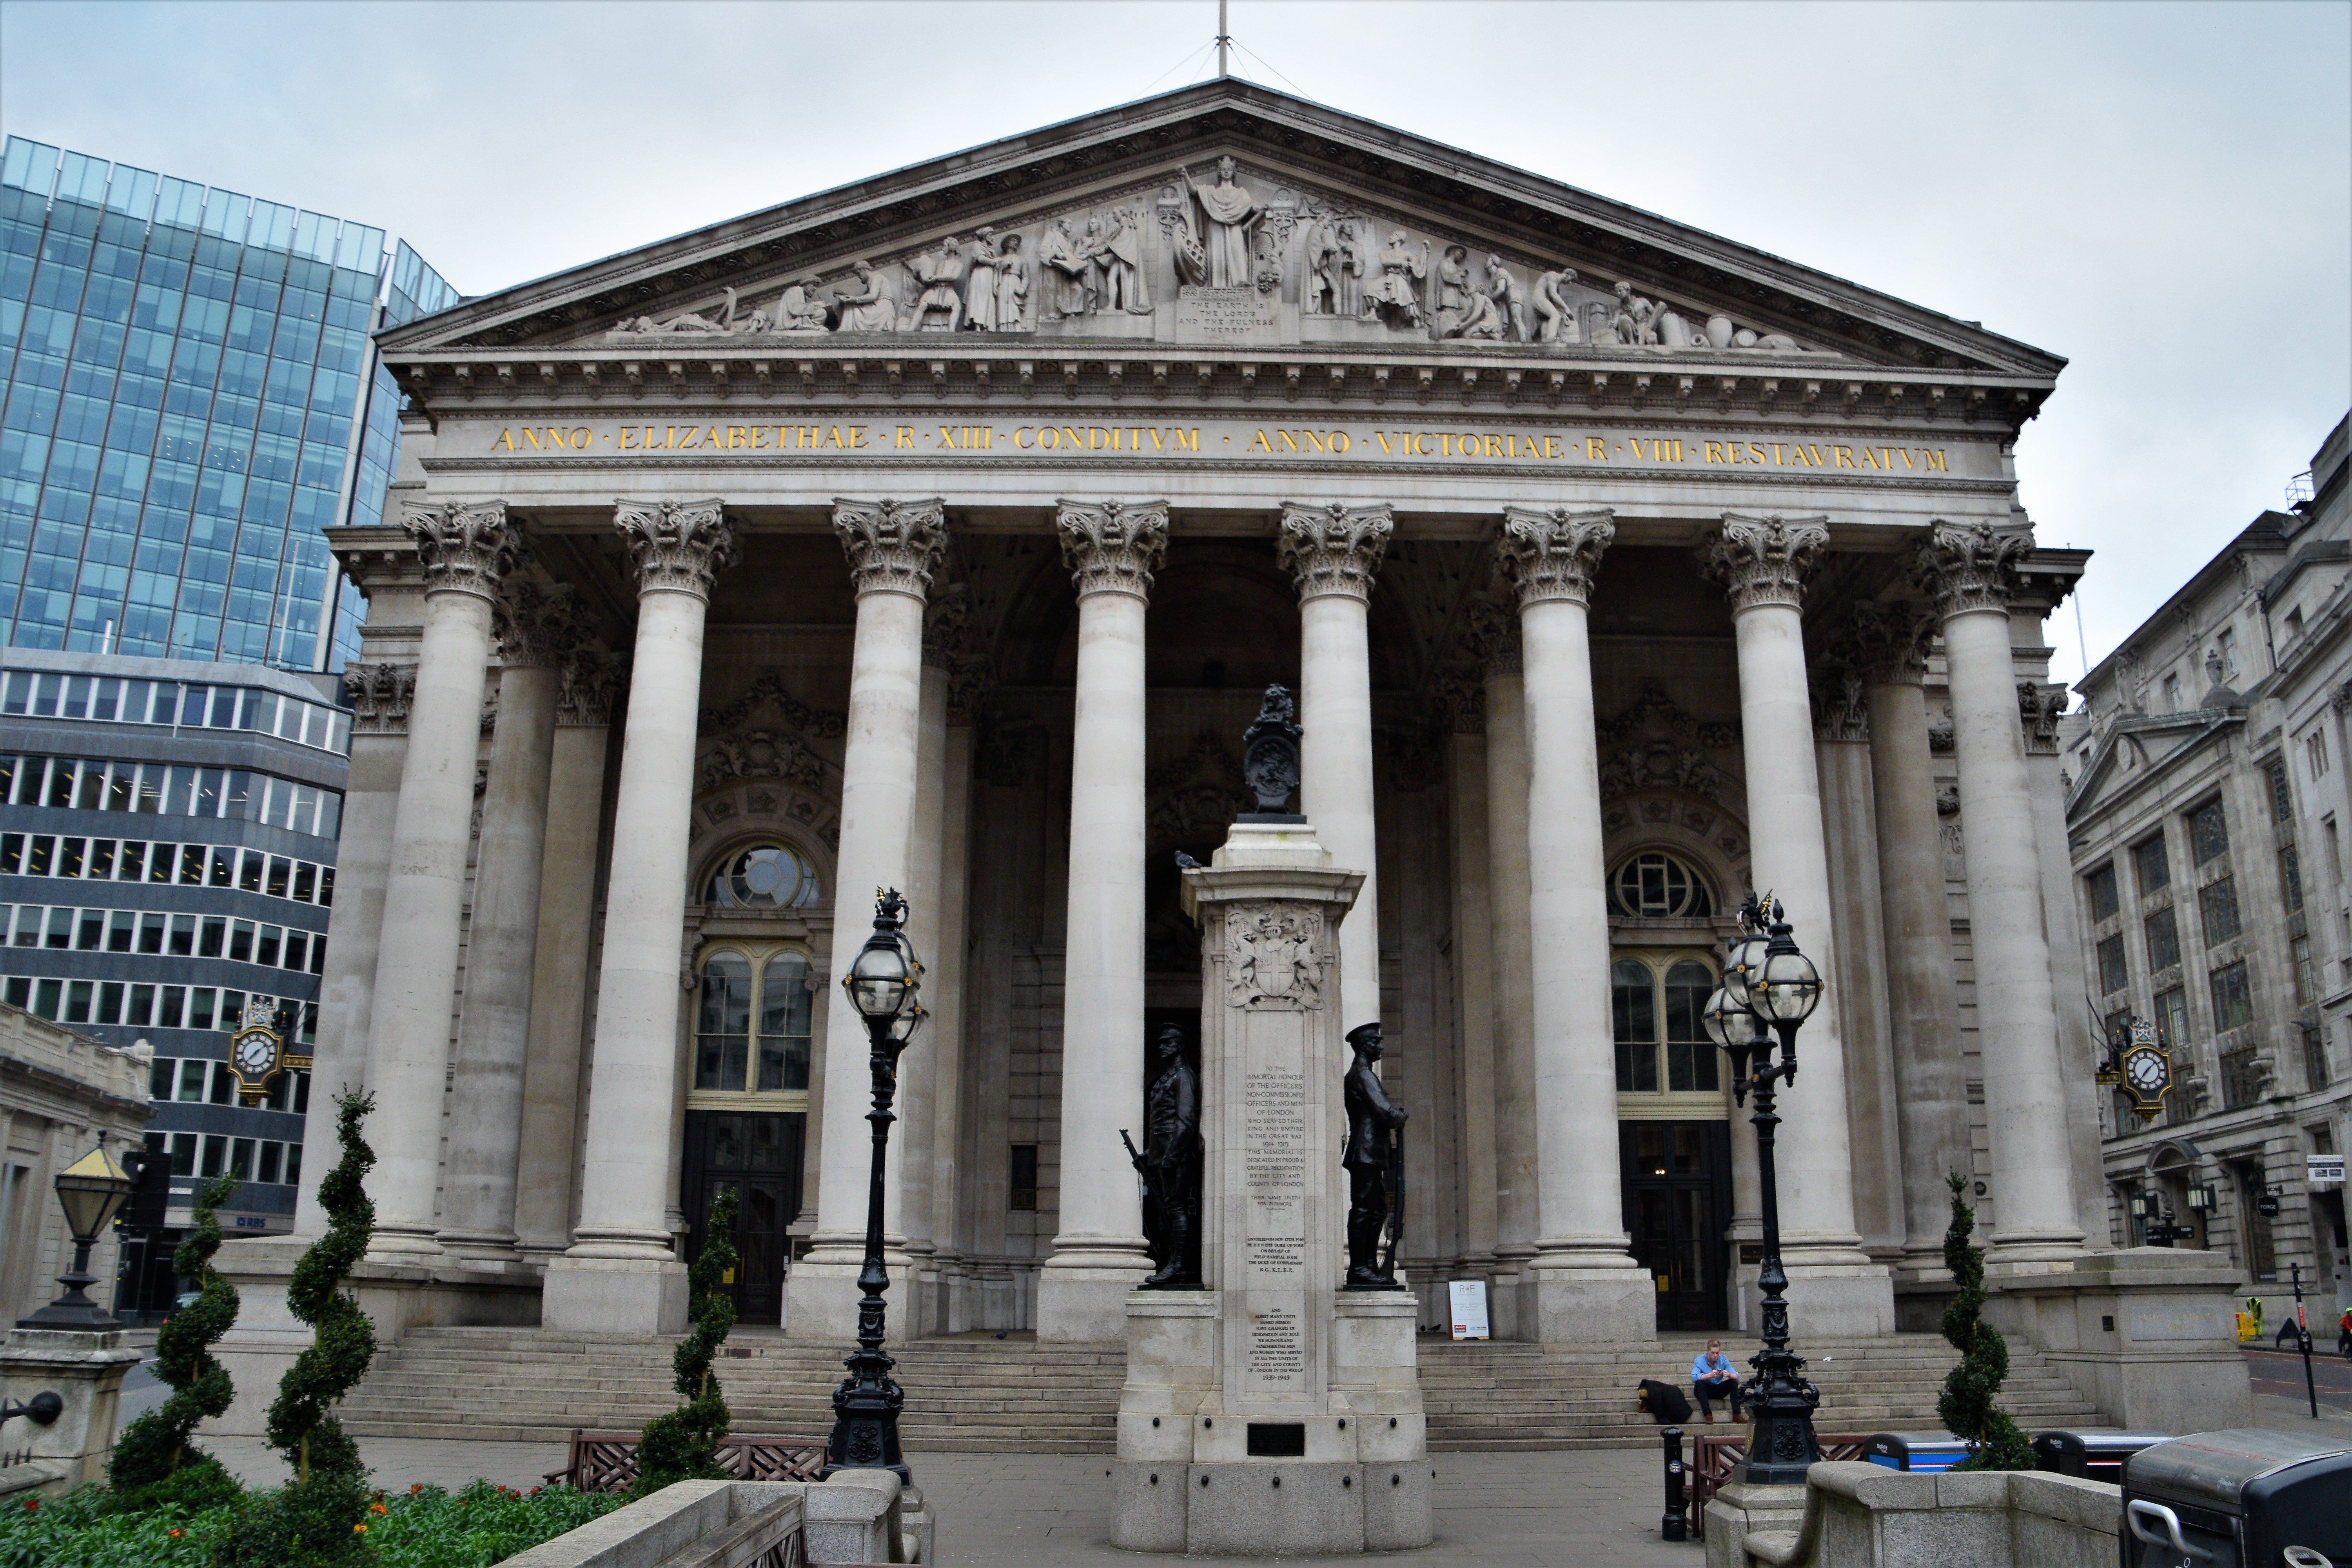 The Royal Exchange, London